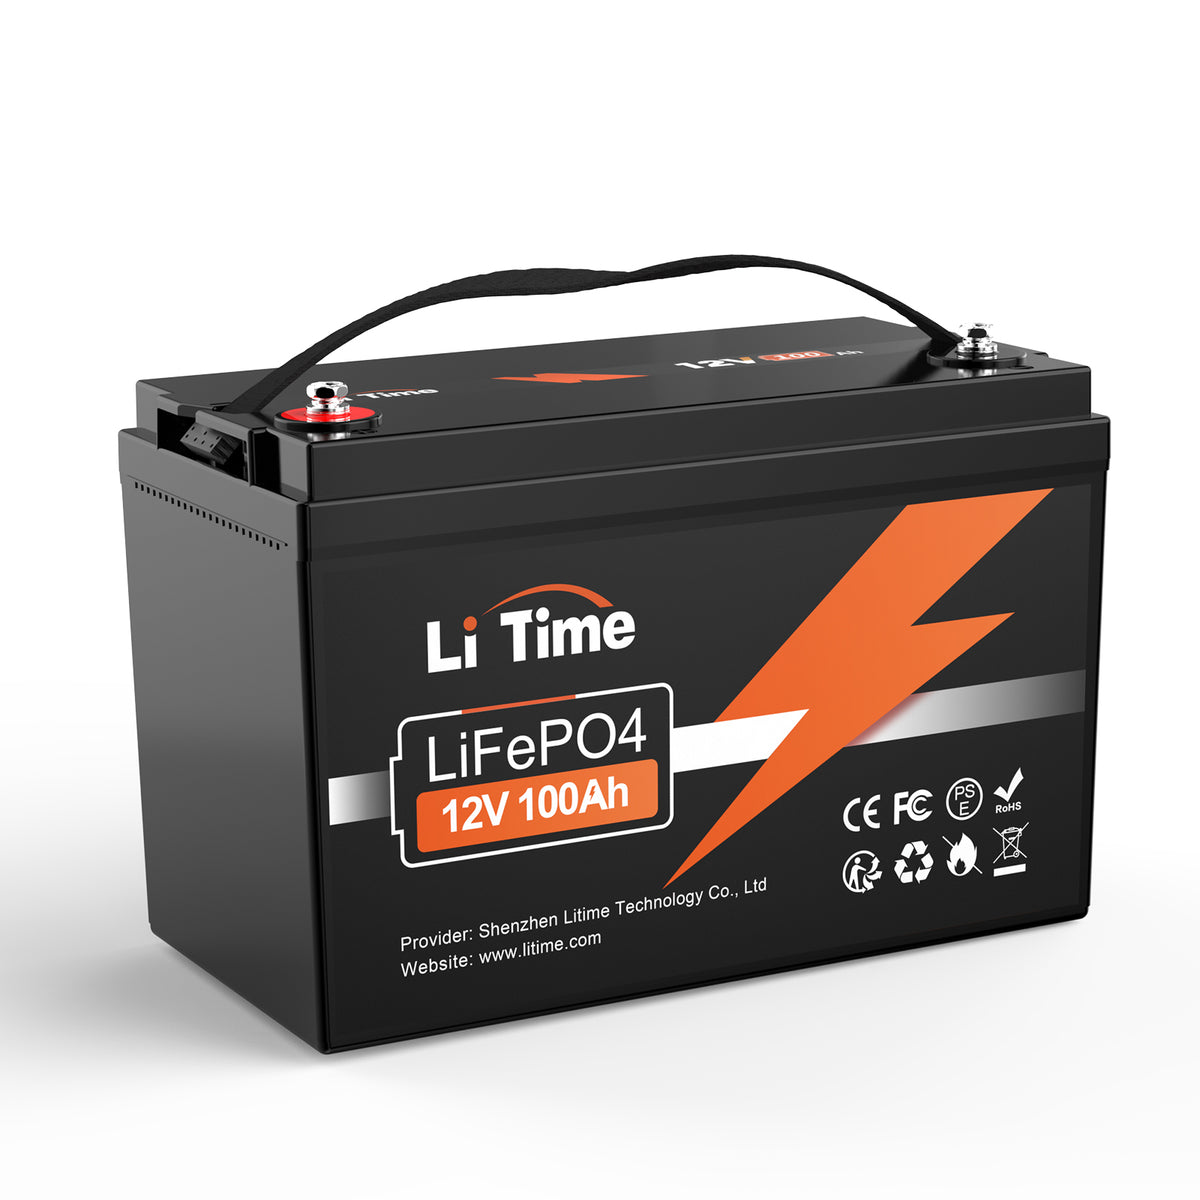 LiTime 12V 100Ah LiFePO4 リン酸鉄リチウムイオンバッテリー 内蔵100A BMS